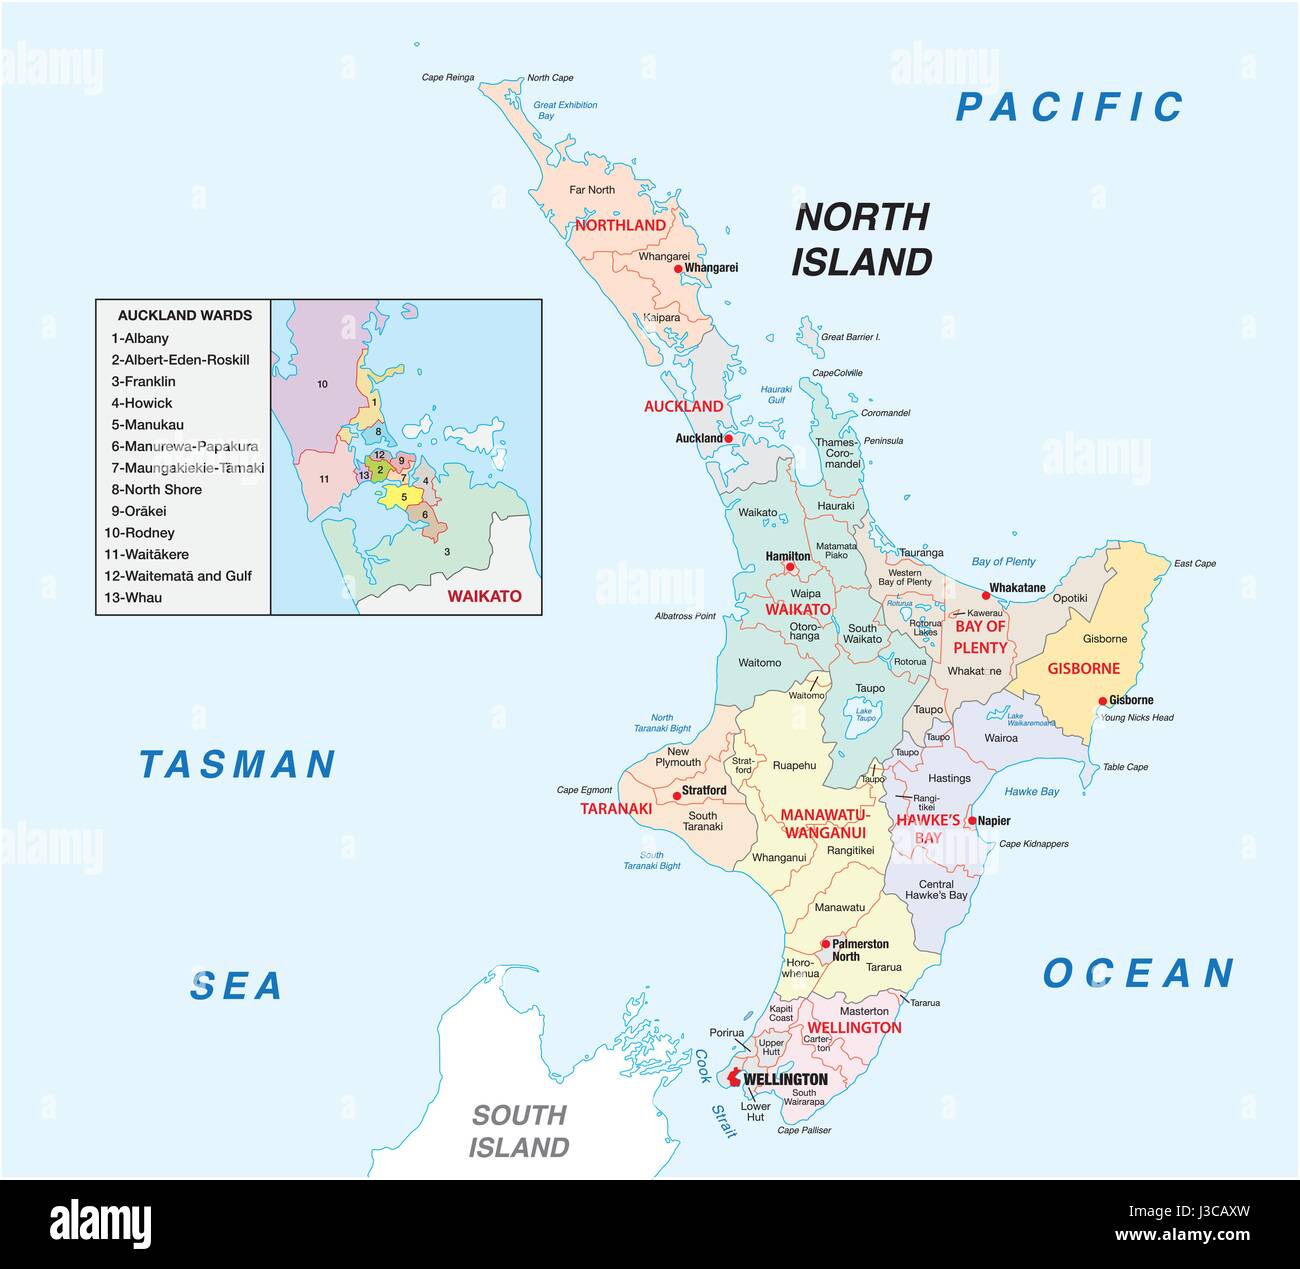 New Zealand North Island carte politique et administrative Illustration de Vecteur